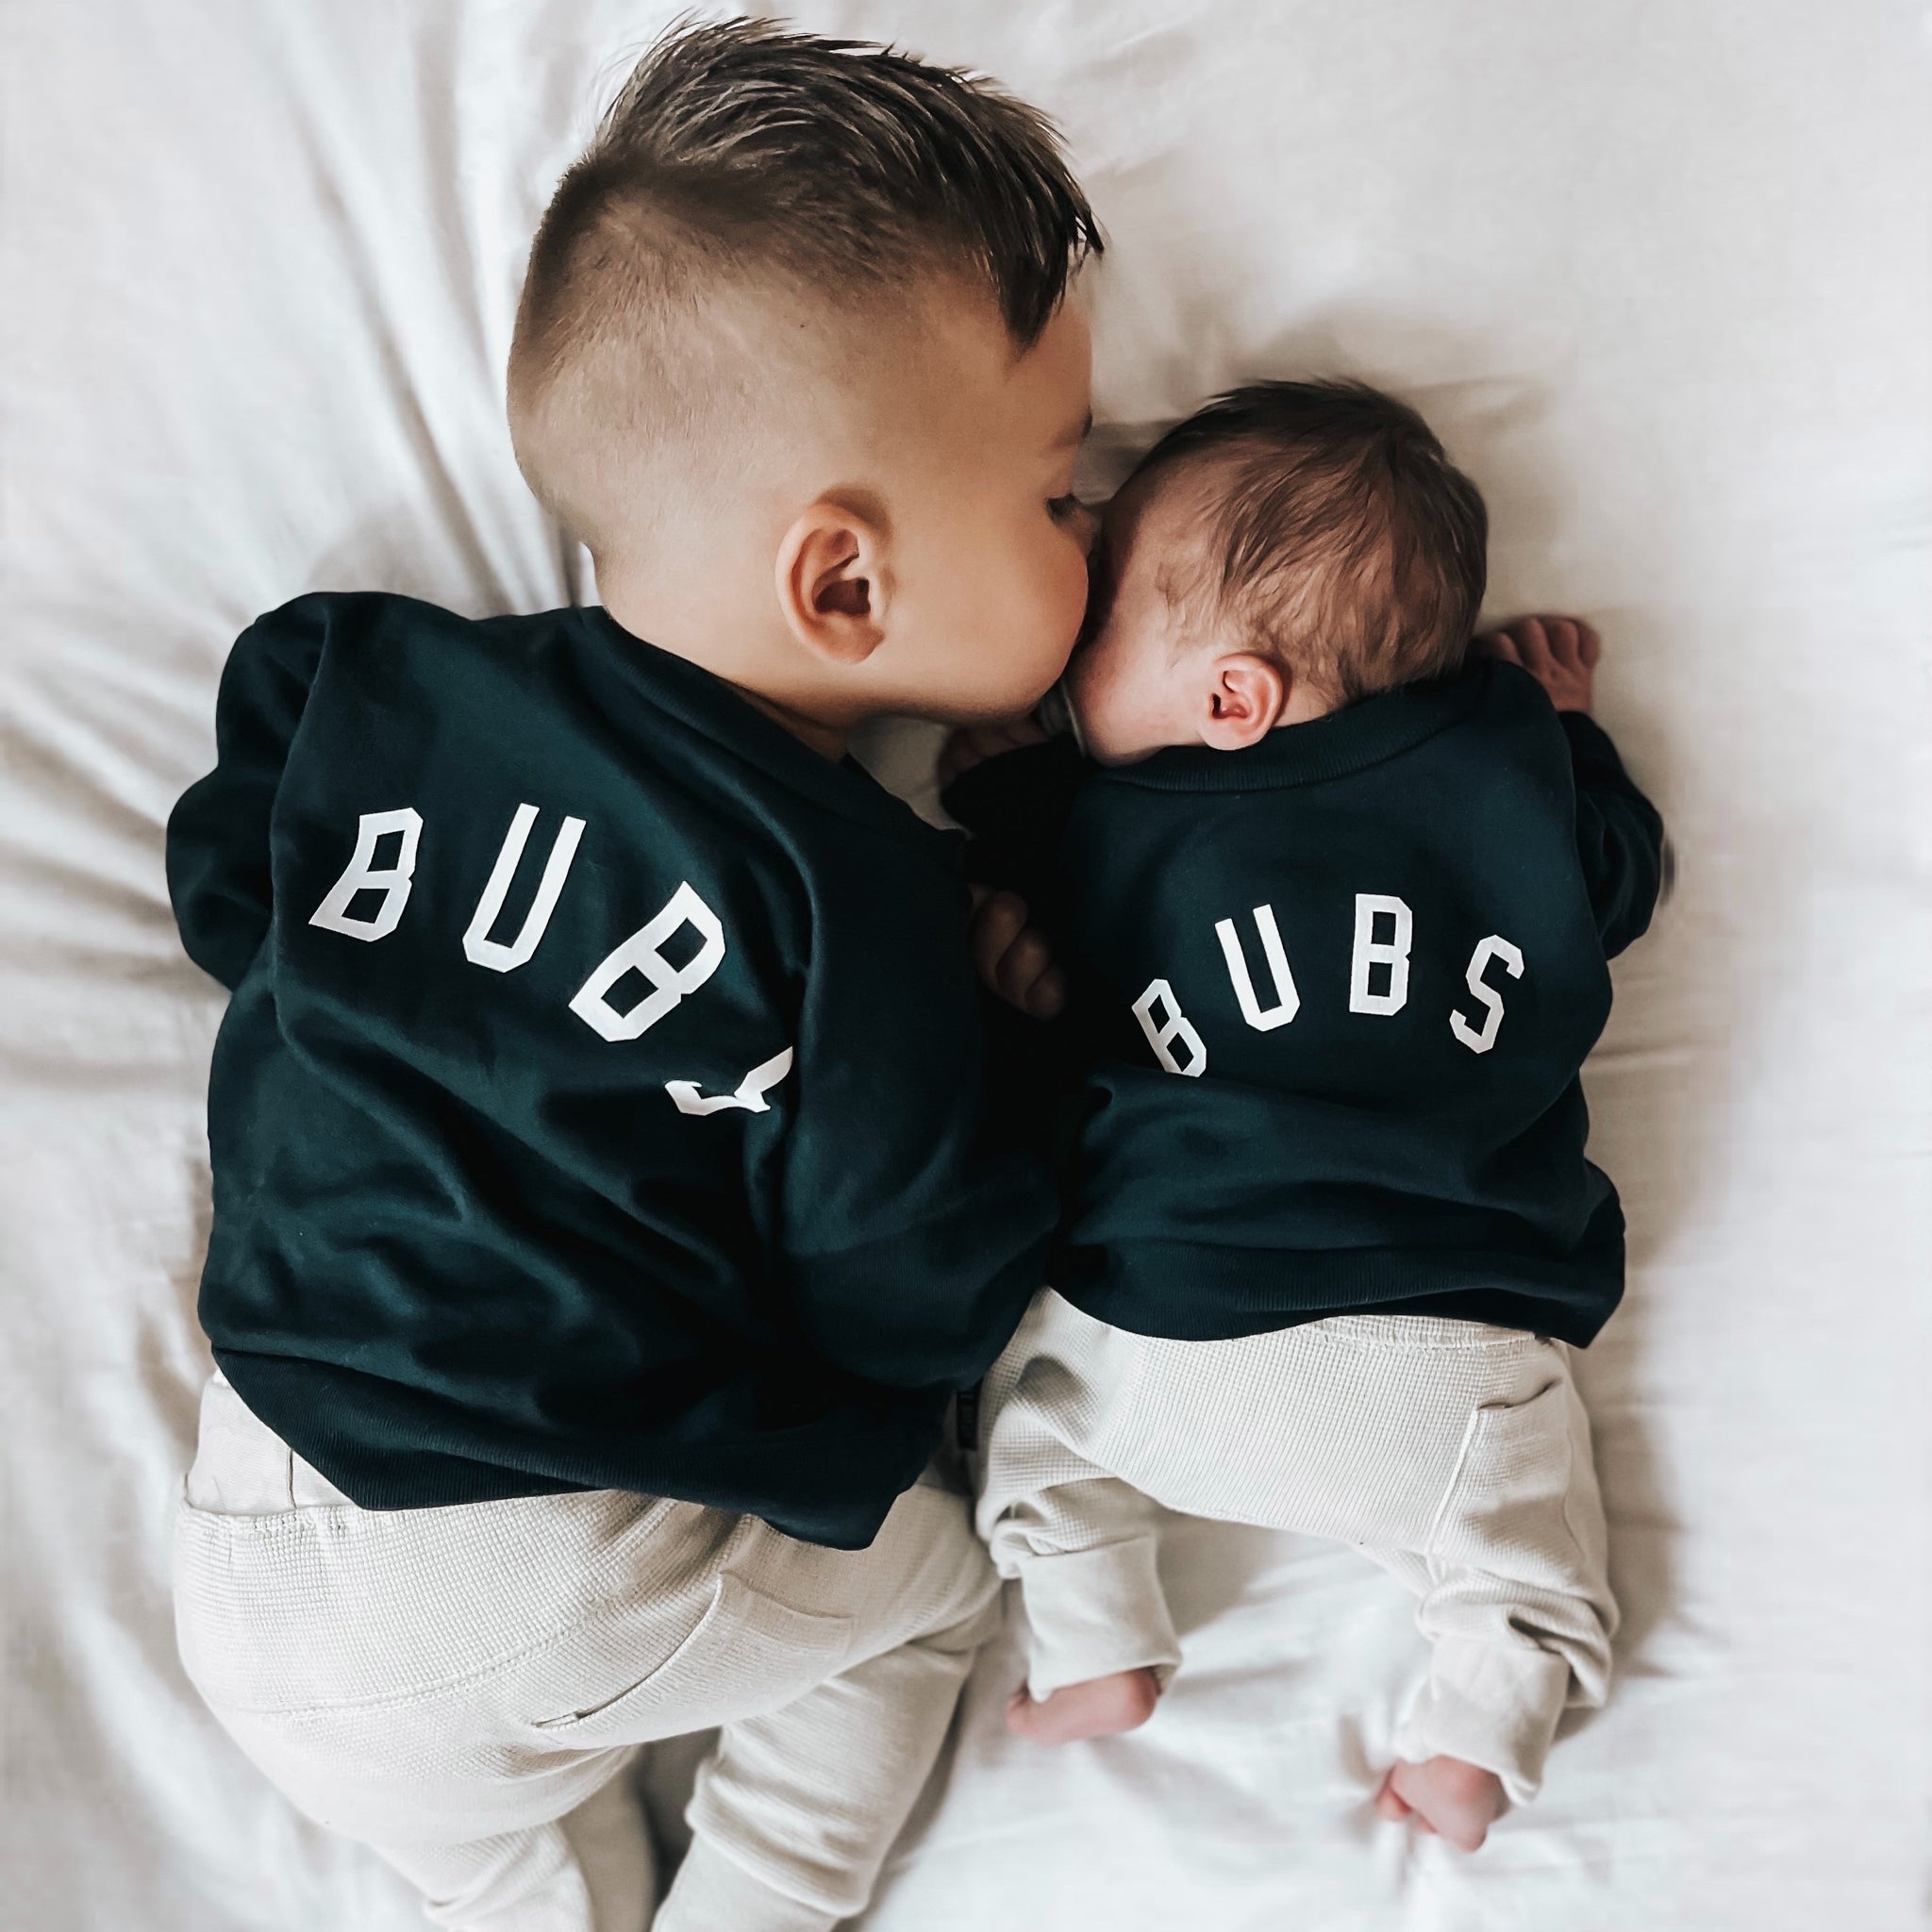 Kids Black "Bubs™" Everyday Boys Sweatshirt - Ford And Wyatt